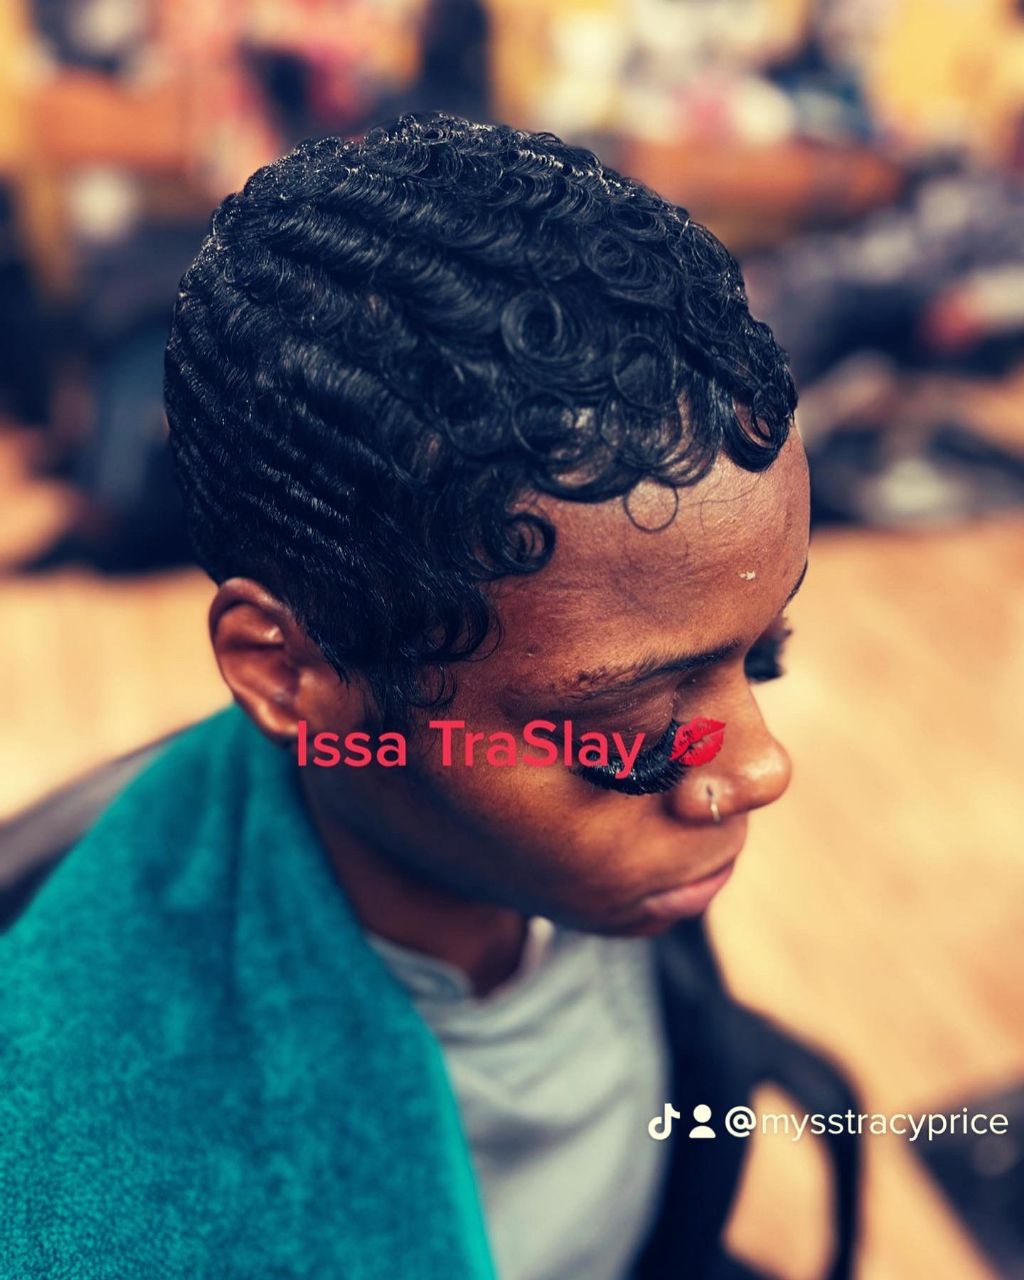 Issa TraSlay 